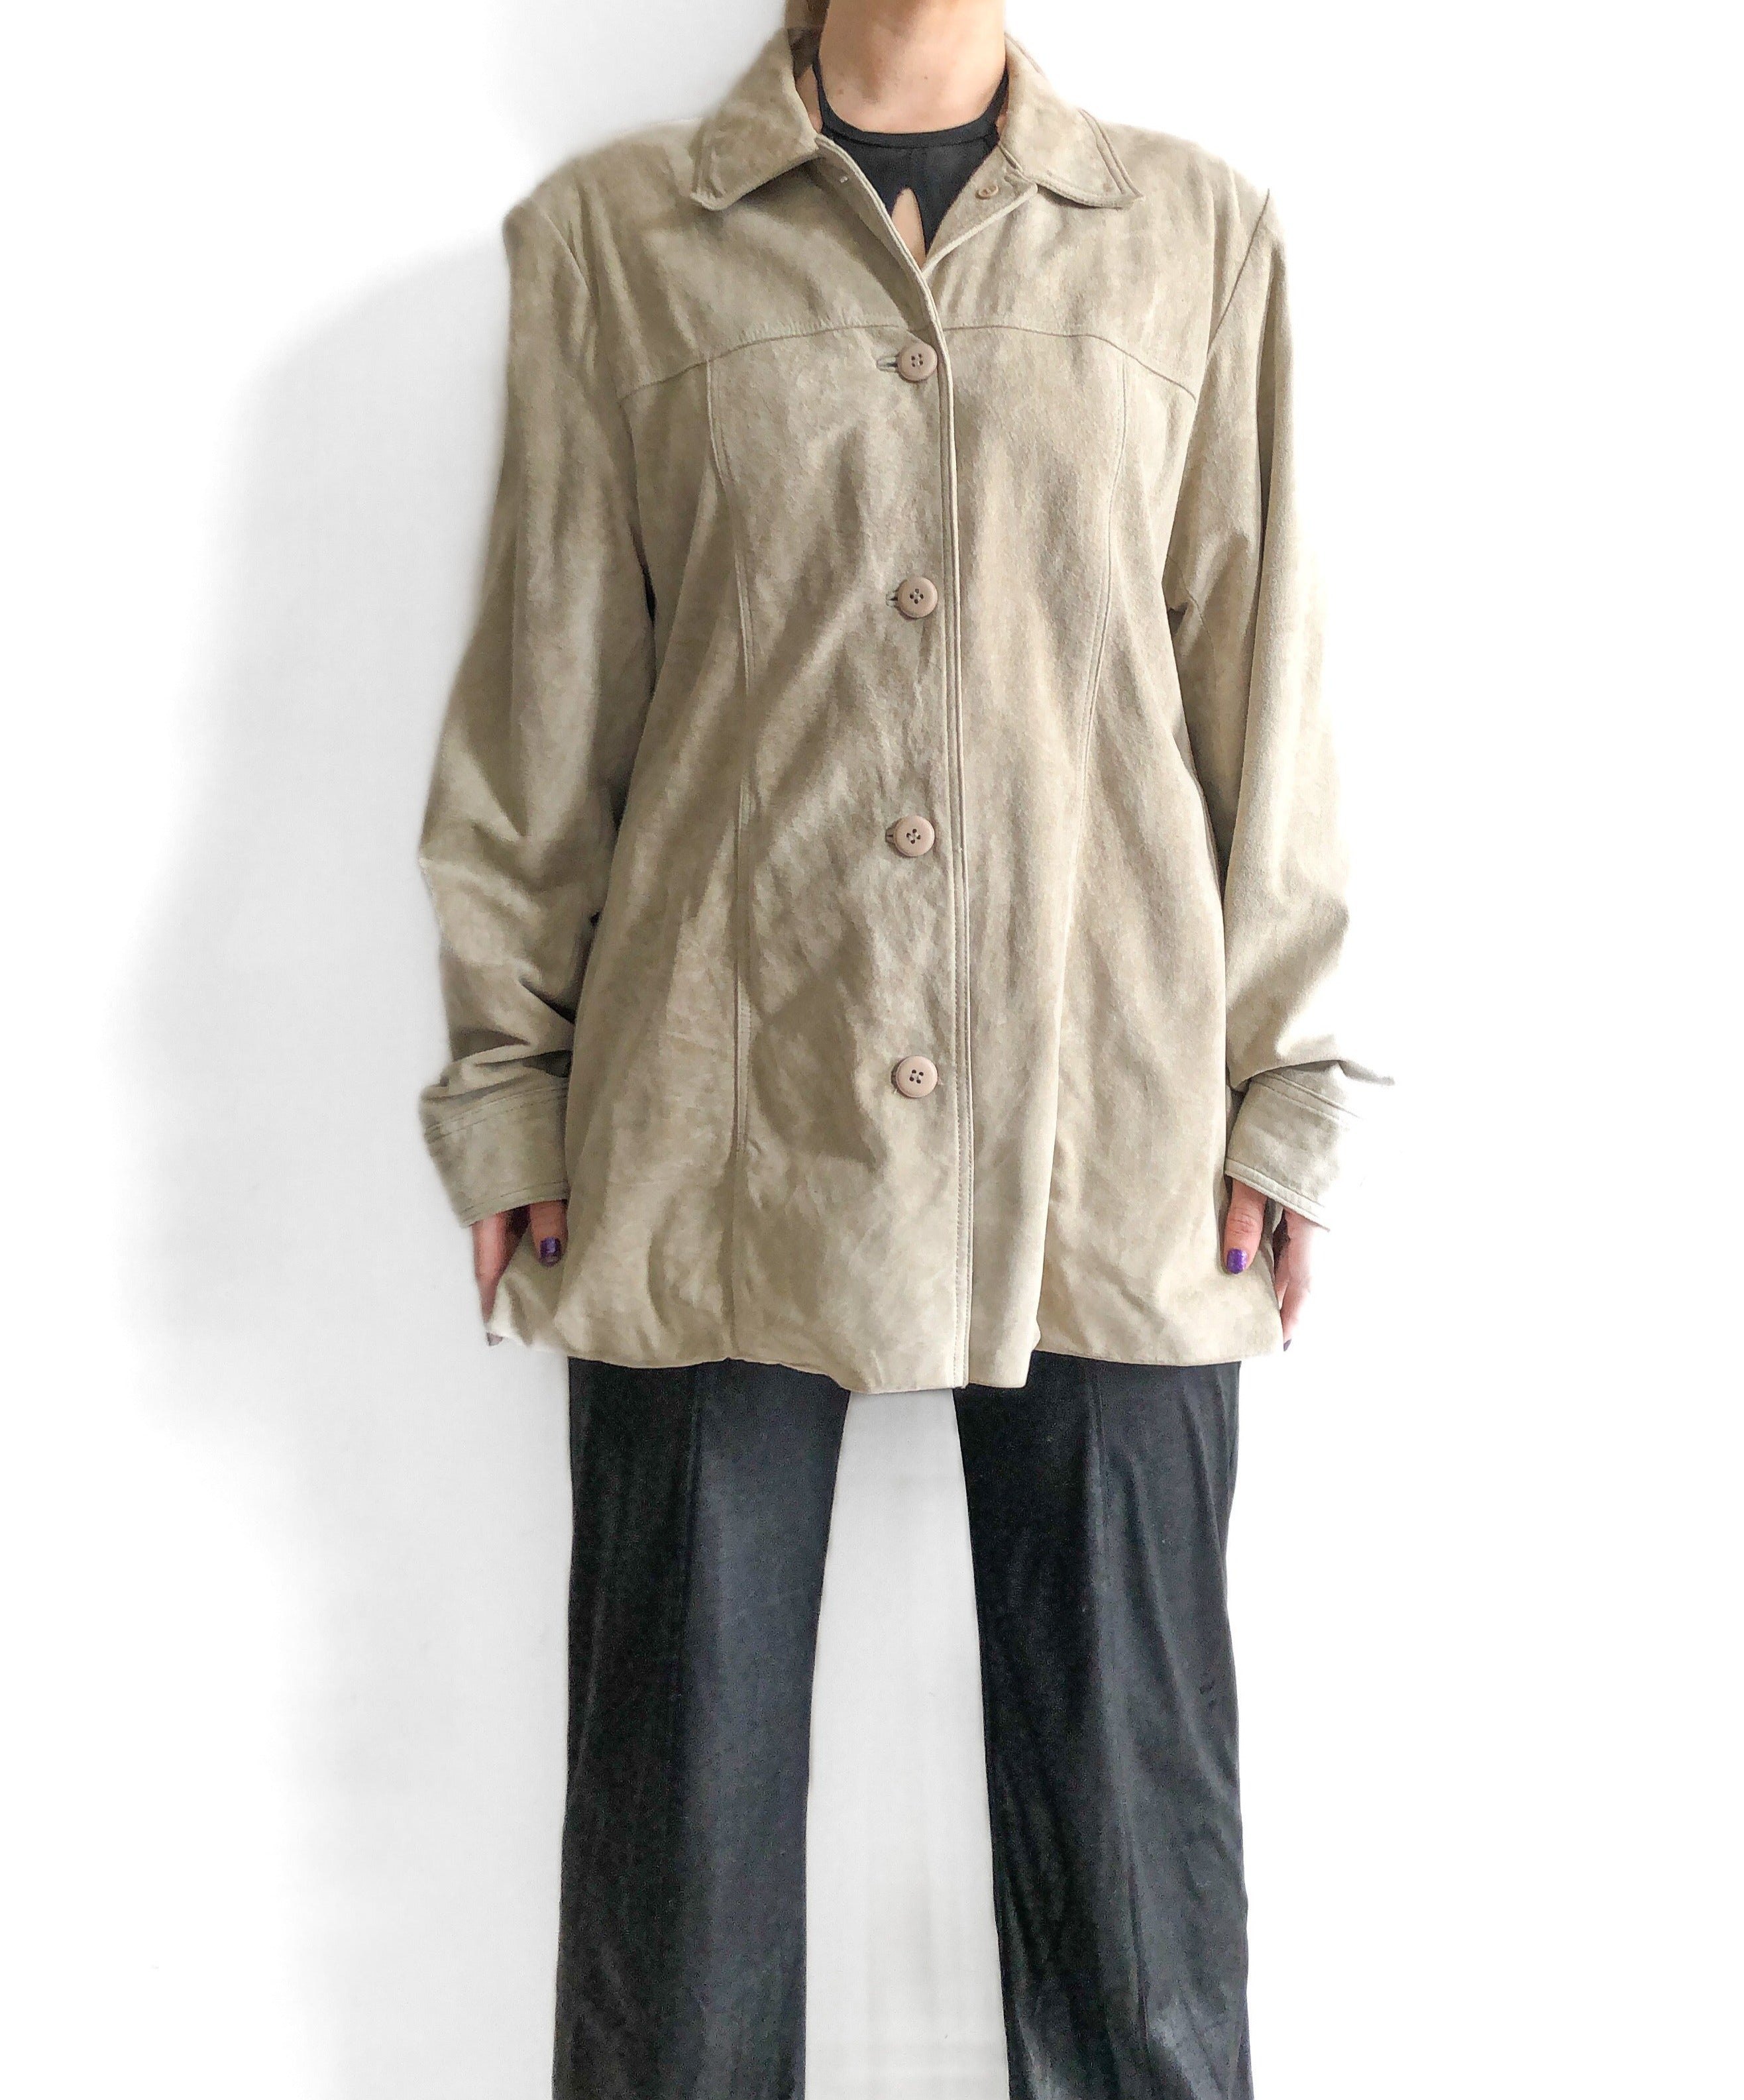 90s Suede Jacket, Beige Midi Suede Panel Jacket, Vintage Leather Panel Jacket, Size Medium Womens